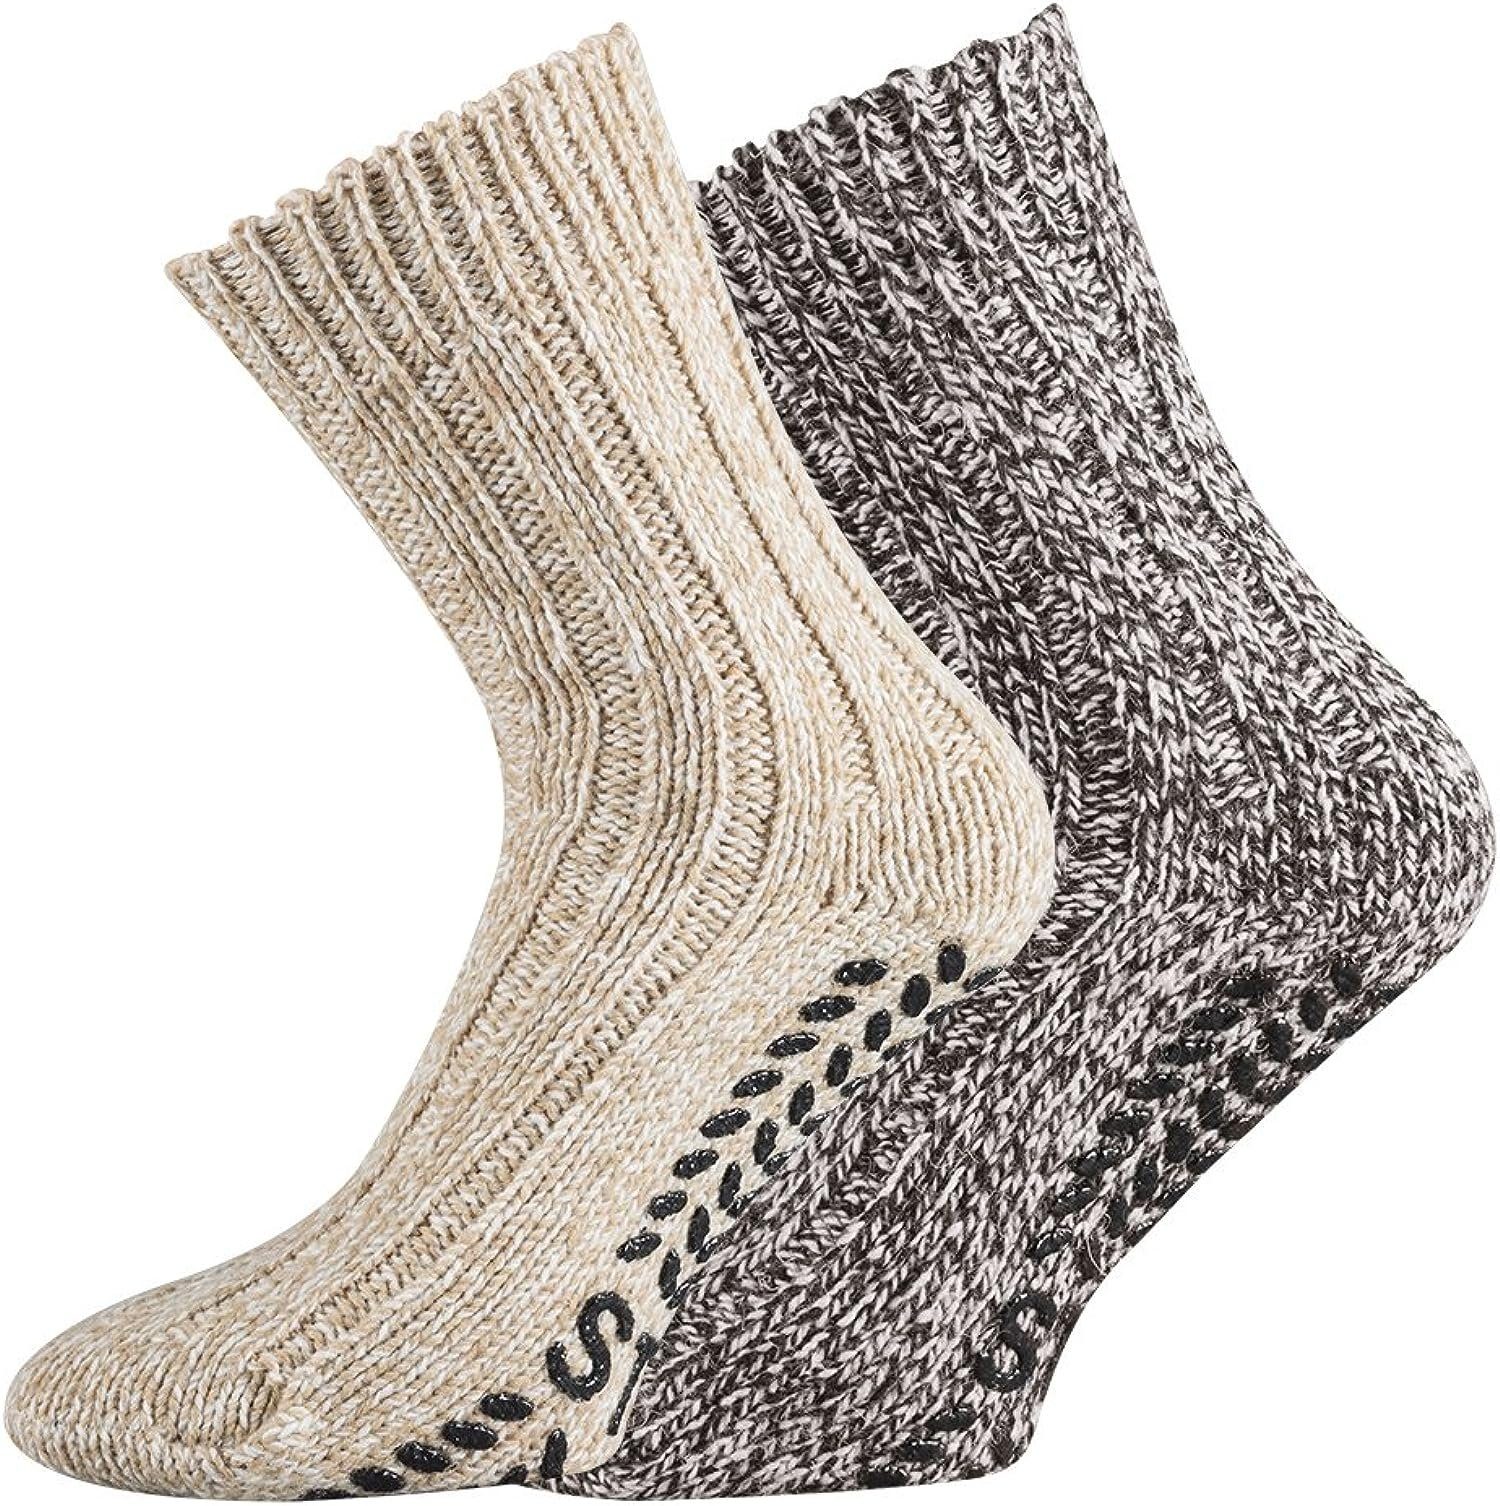 TippTexx 24 ABS-Socken 2 Paar warme ABS-Stopper-Norweger-Socken EIN ECHTER HAUSSCHUH-ERSATZ Braun/Beigetöne